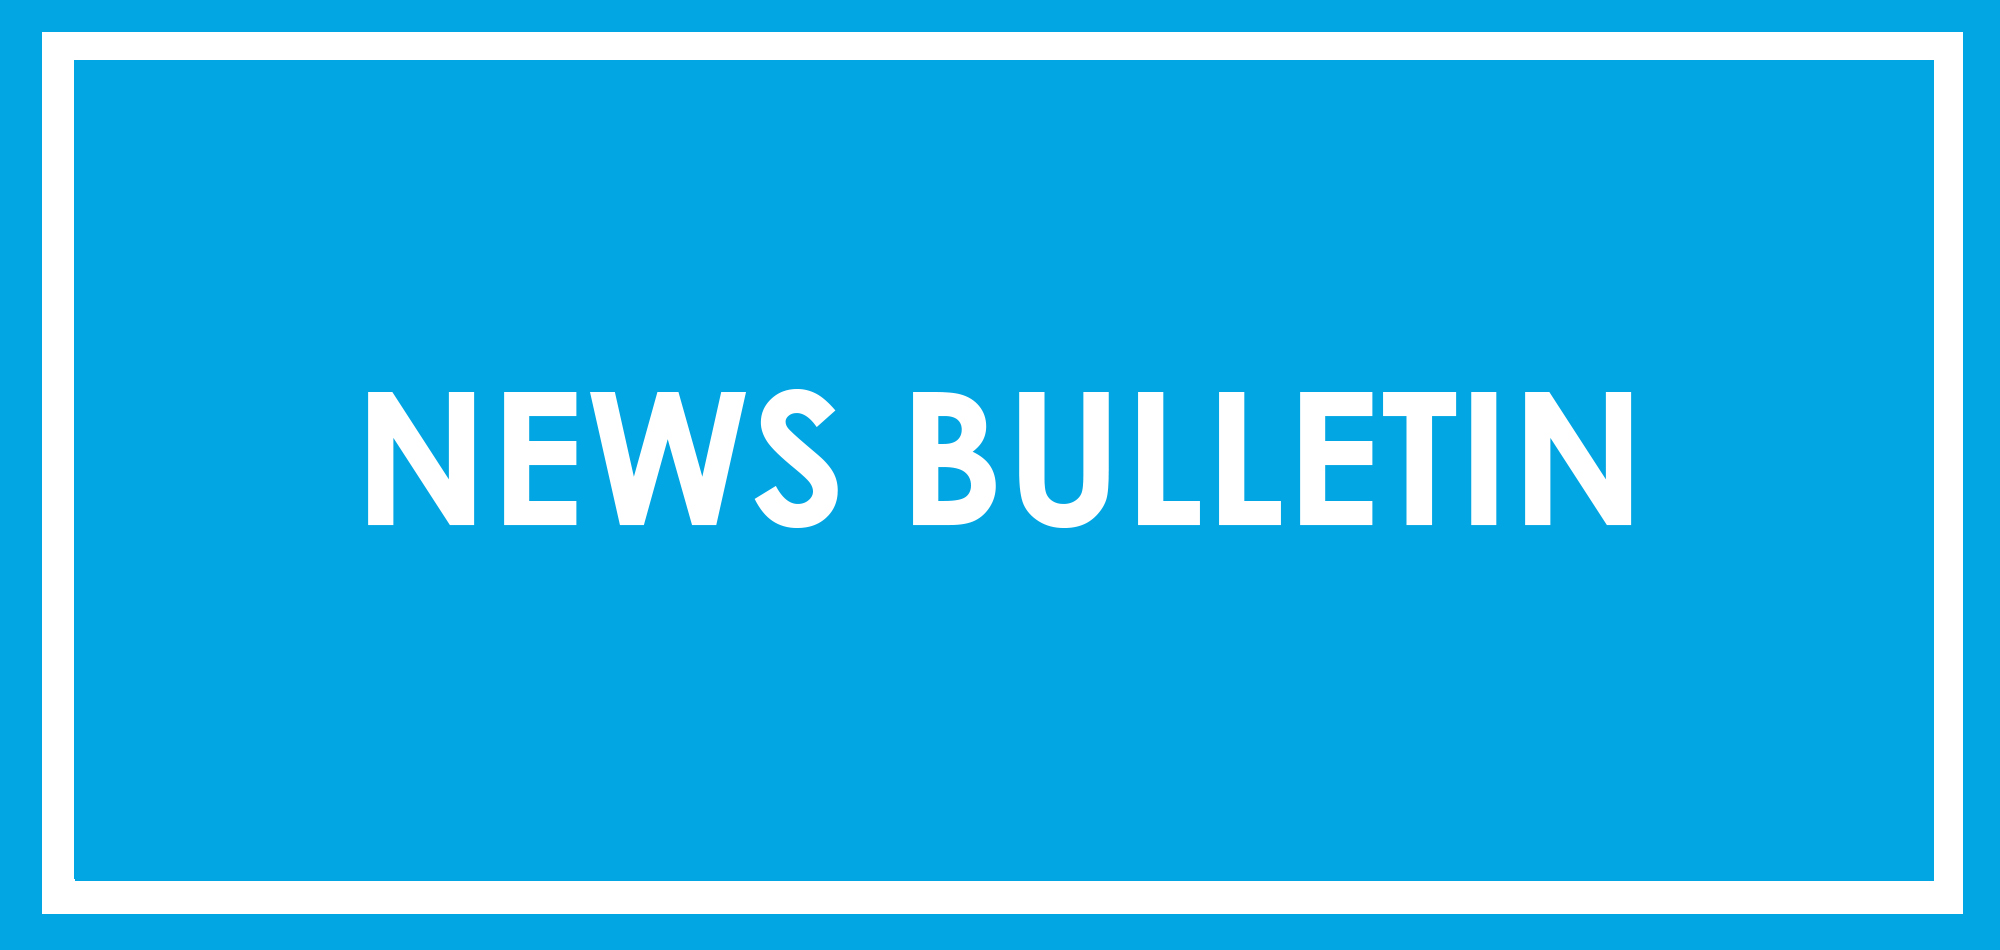 News Bulletin - 11.08.20